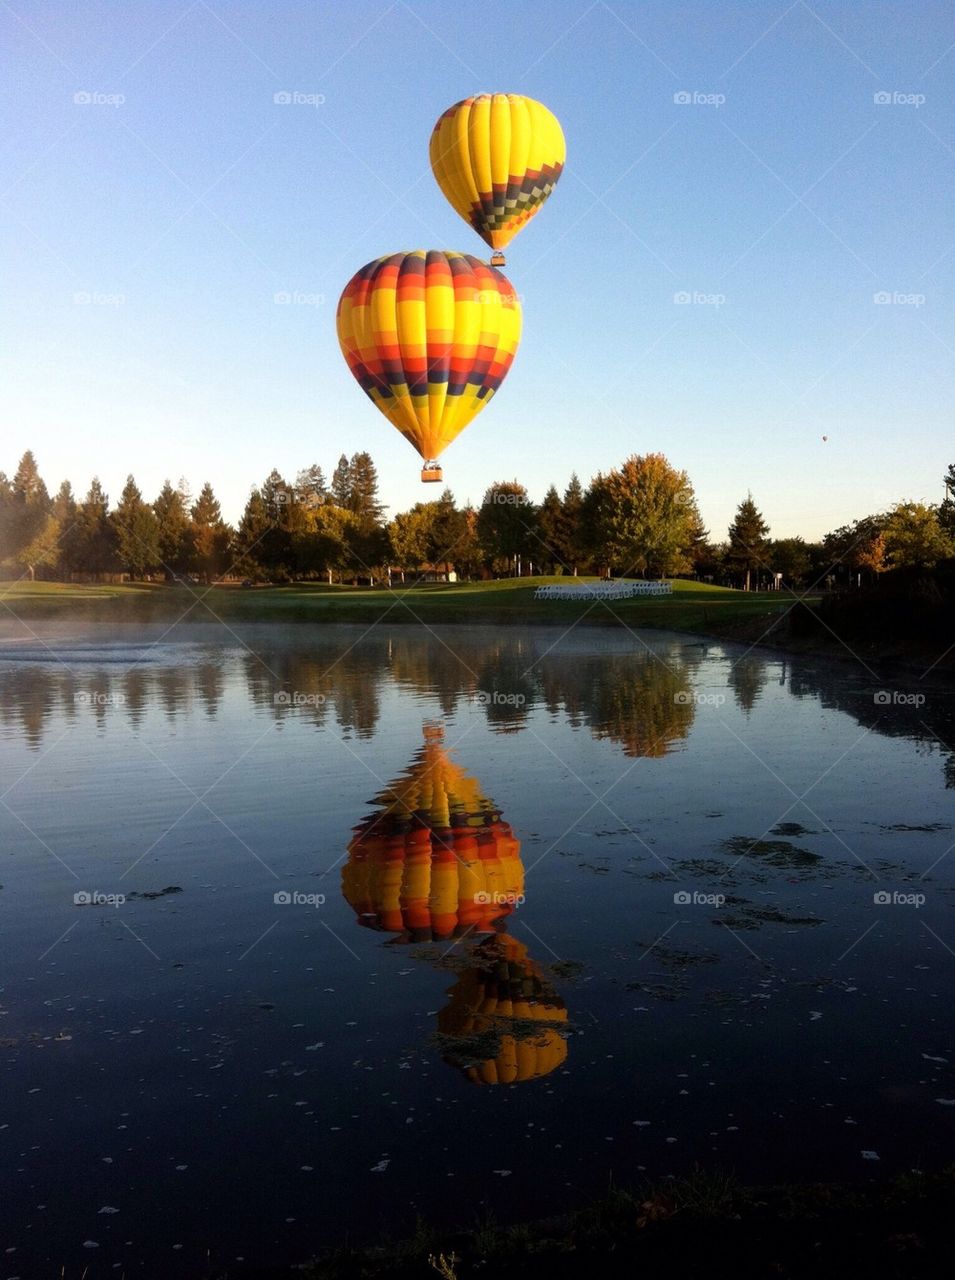 Balloon over pond